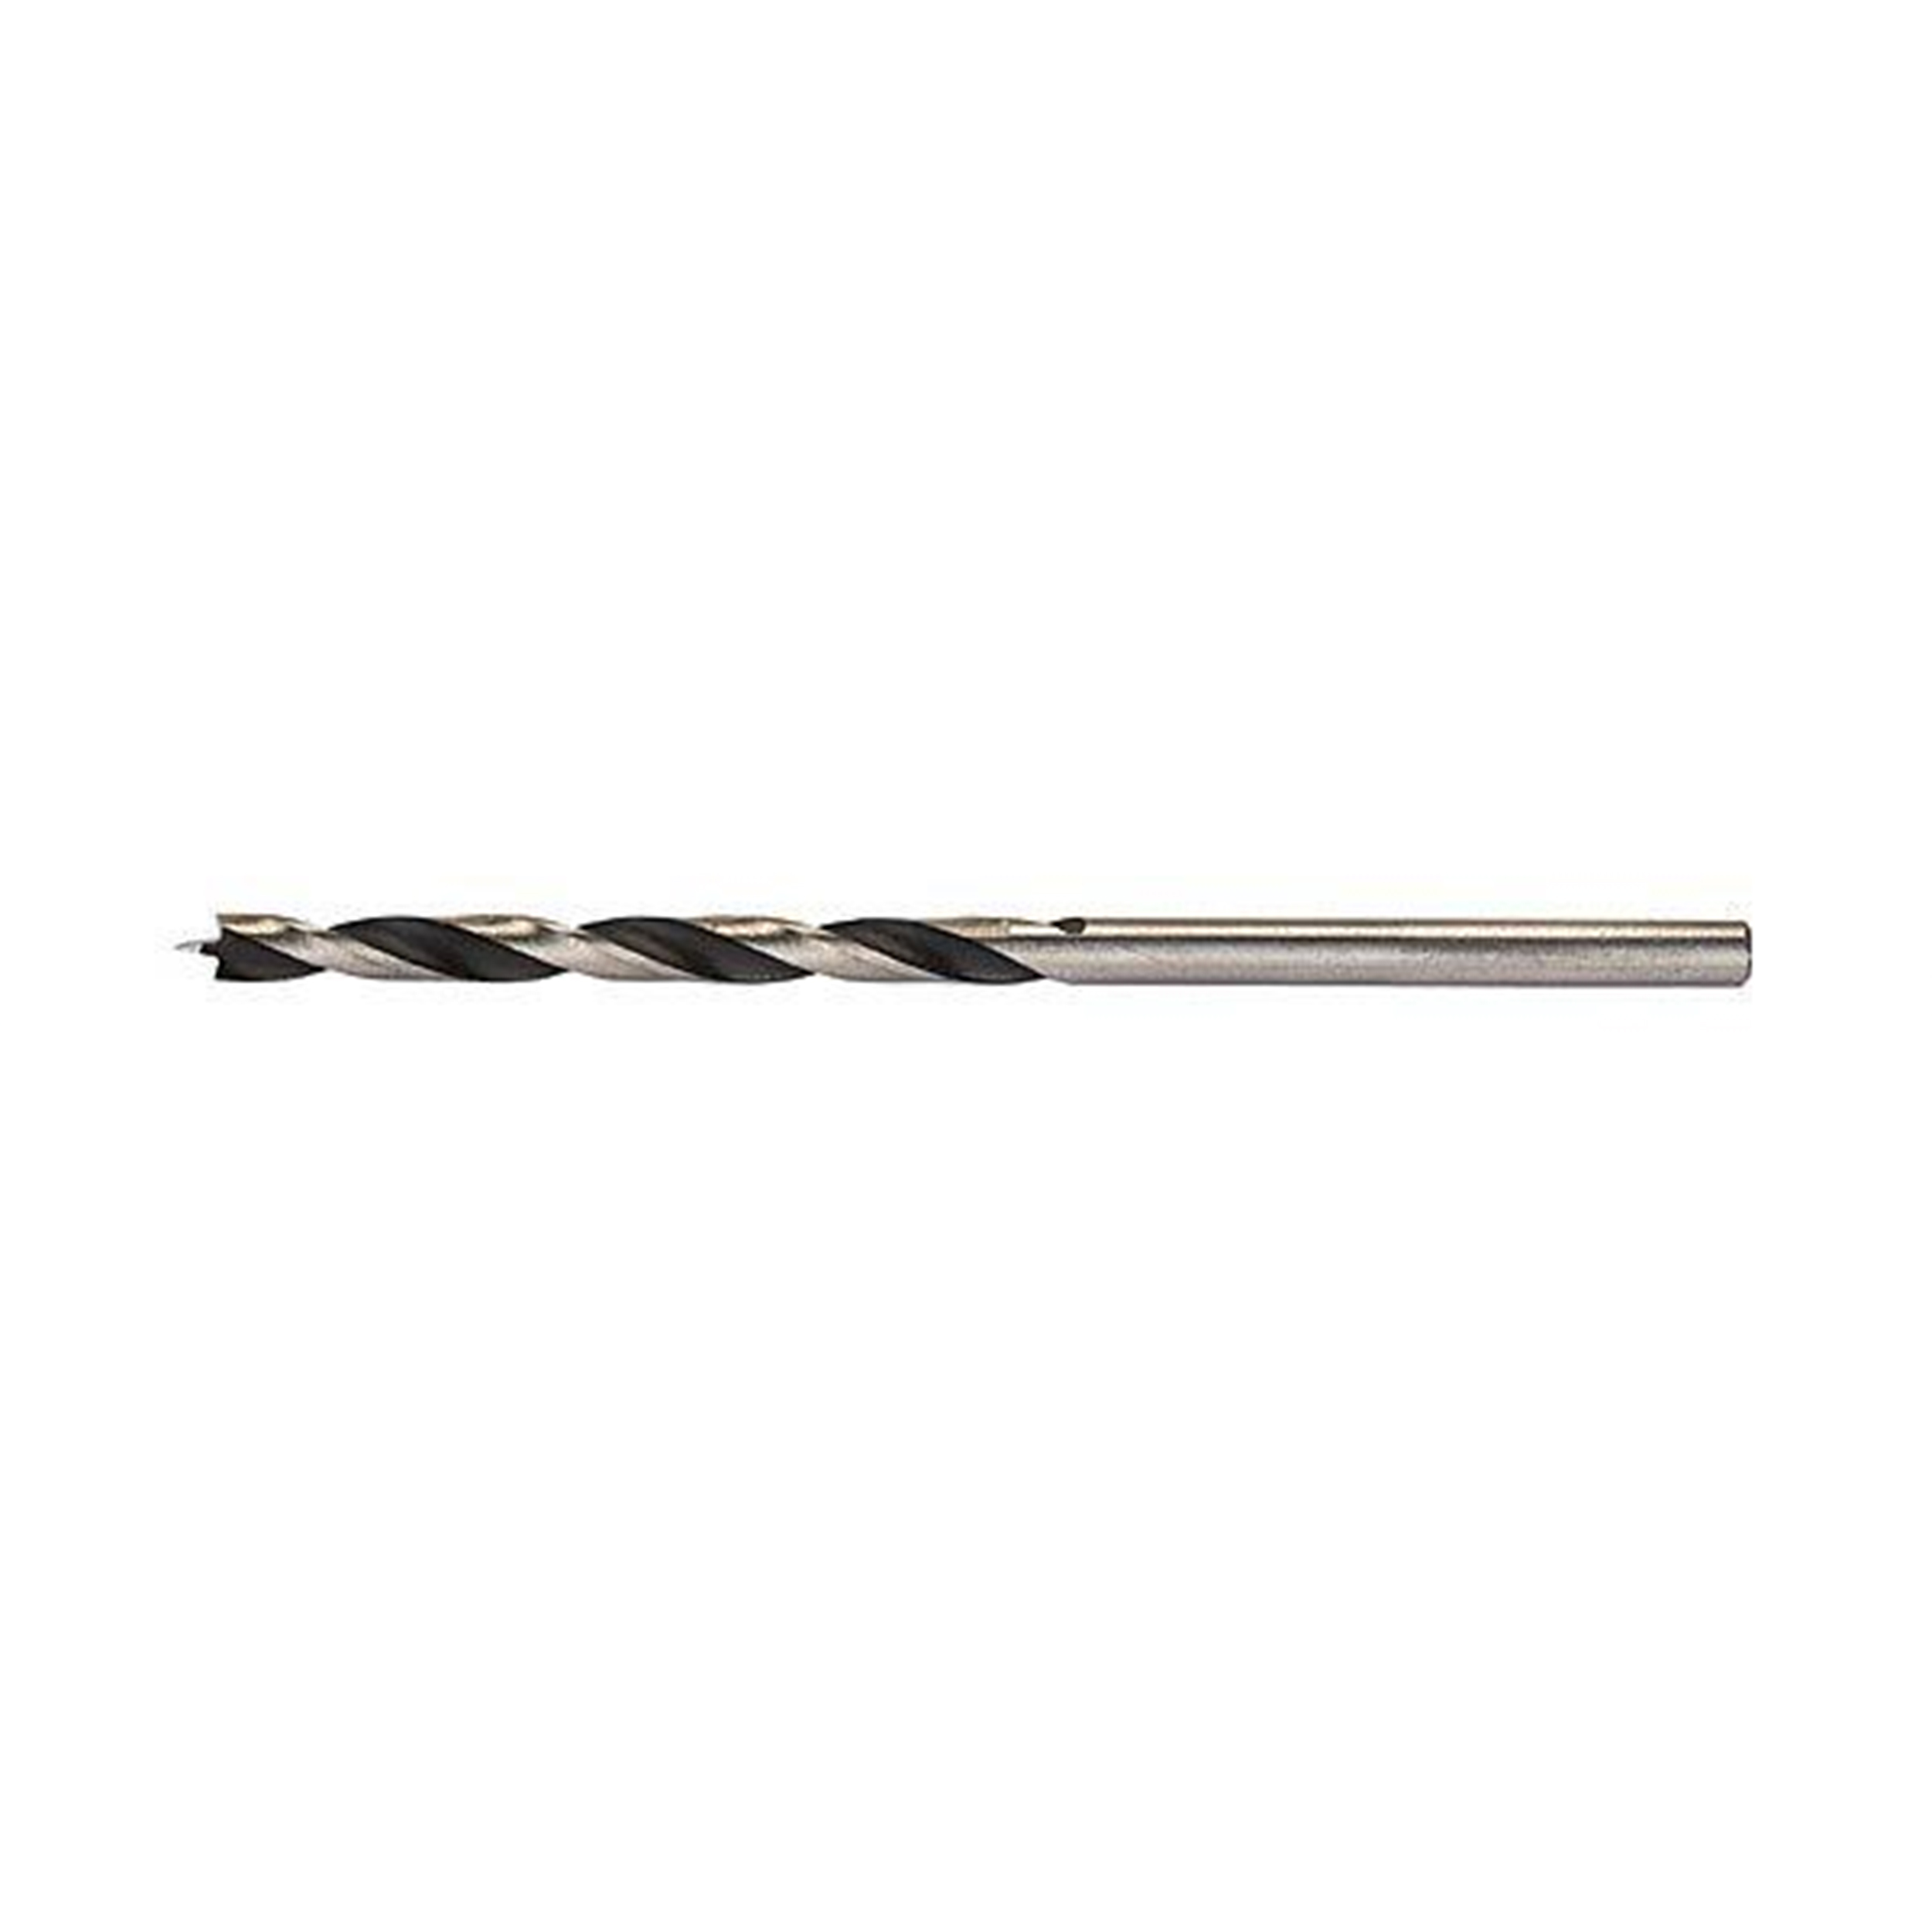 1/8-inch Chrome-vanadium Steel Brad Point Drill Bit